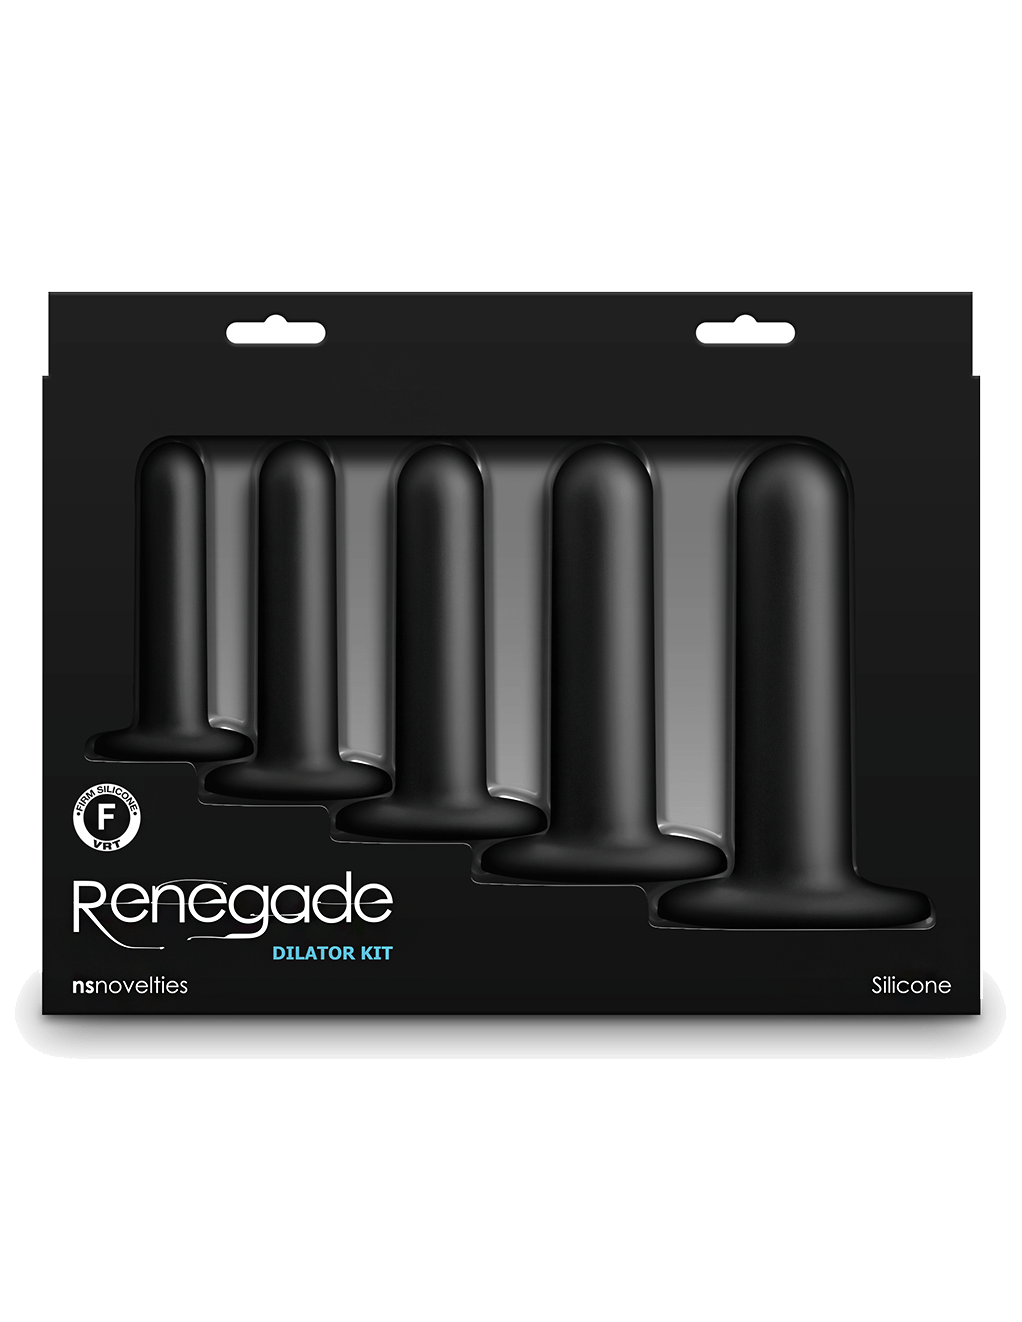 Renegade Dilator Kit - Black - Box - Back